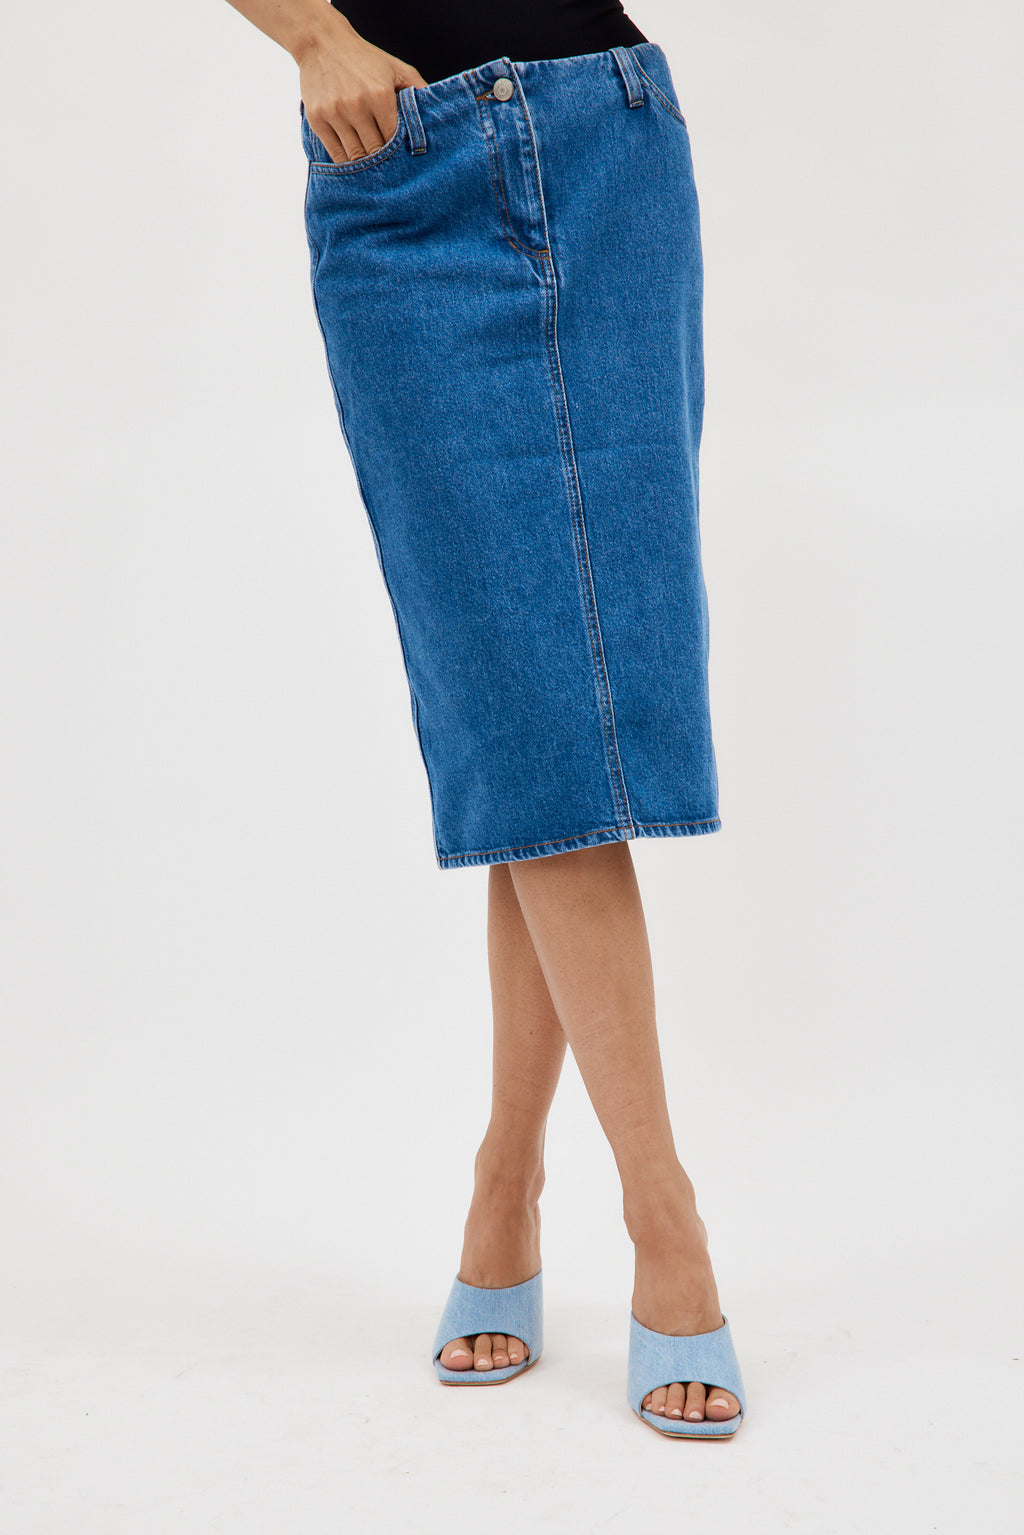 Knee Length Blue Denim Pencil Skirt